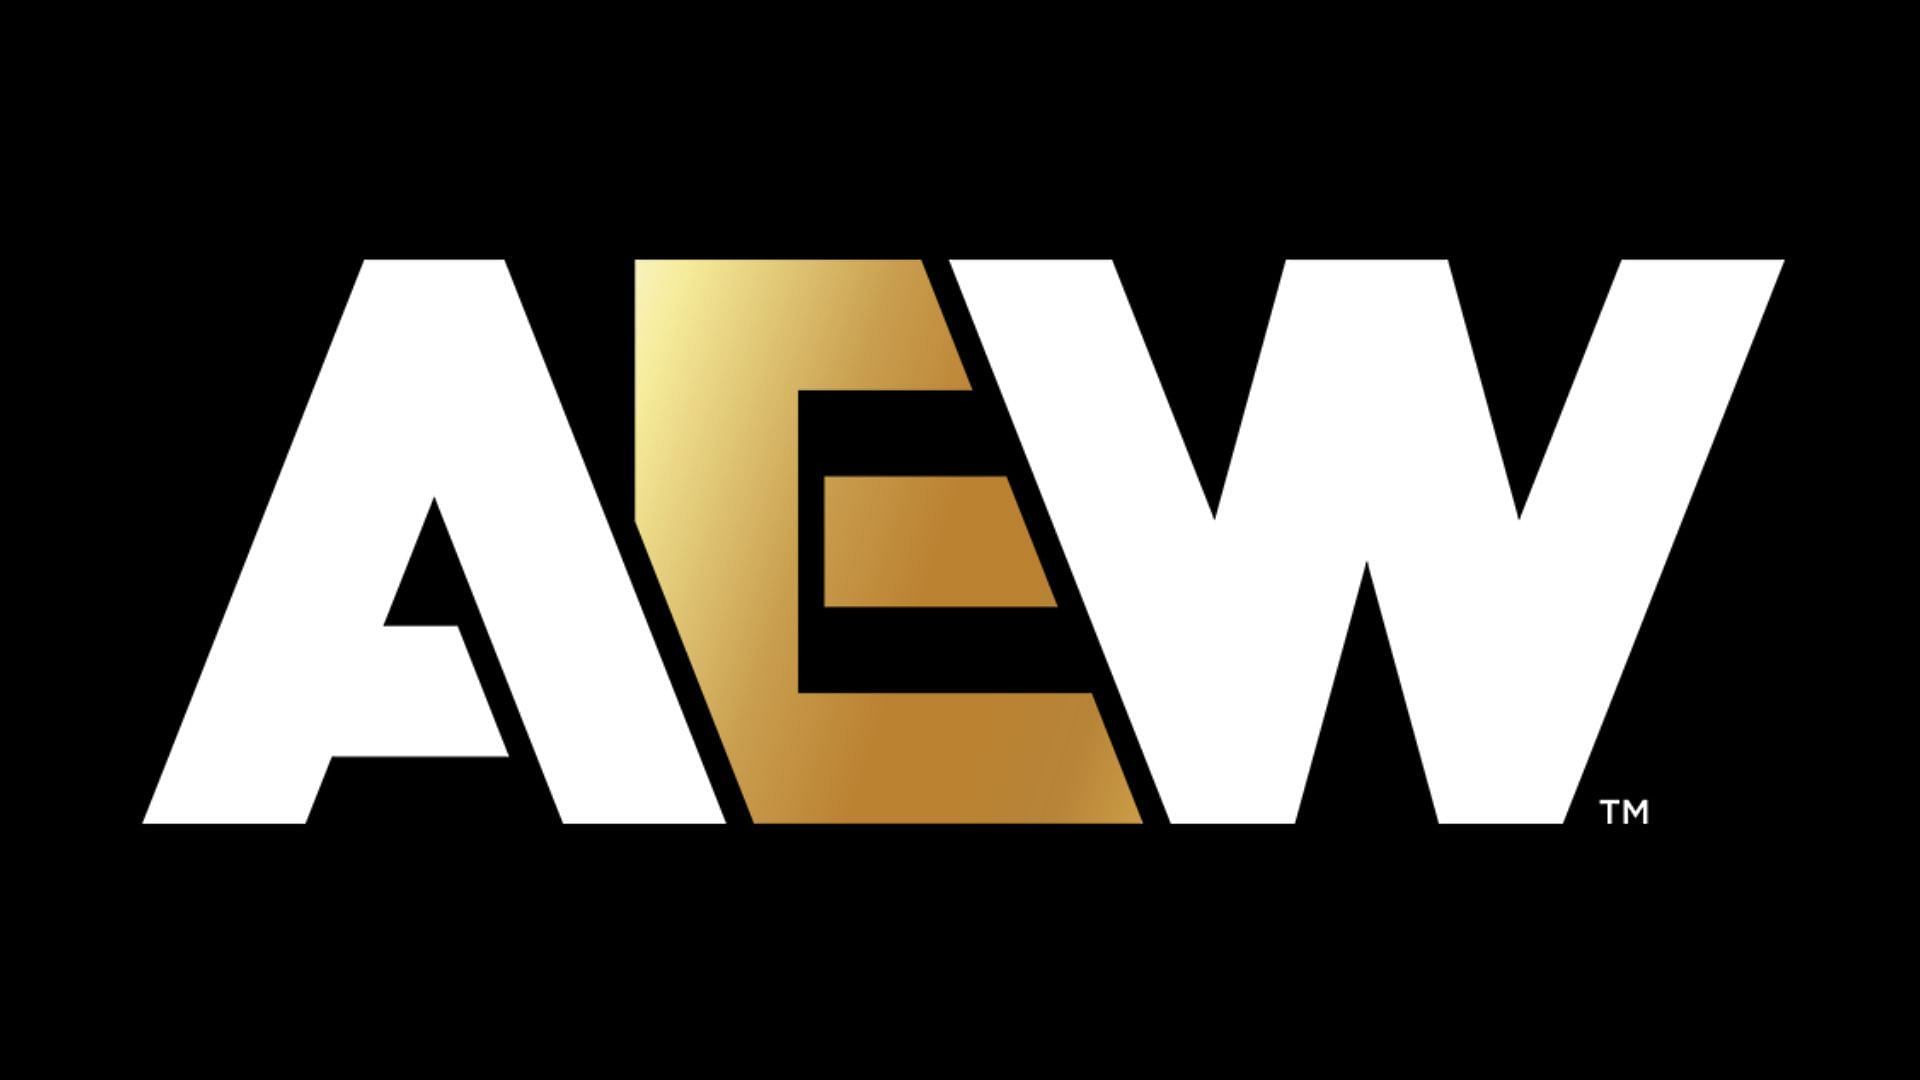 All Elite Wrestling is a Jacksonville-based promotion led by Tony Khan [Logo taken from AEW